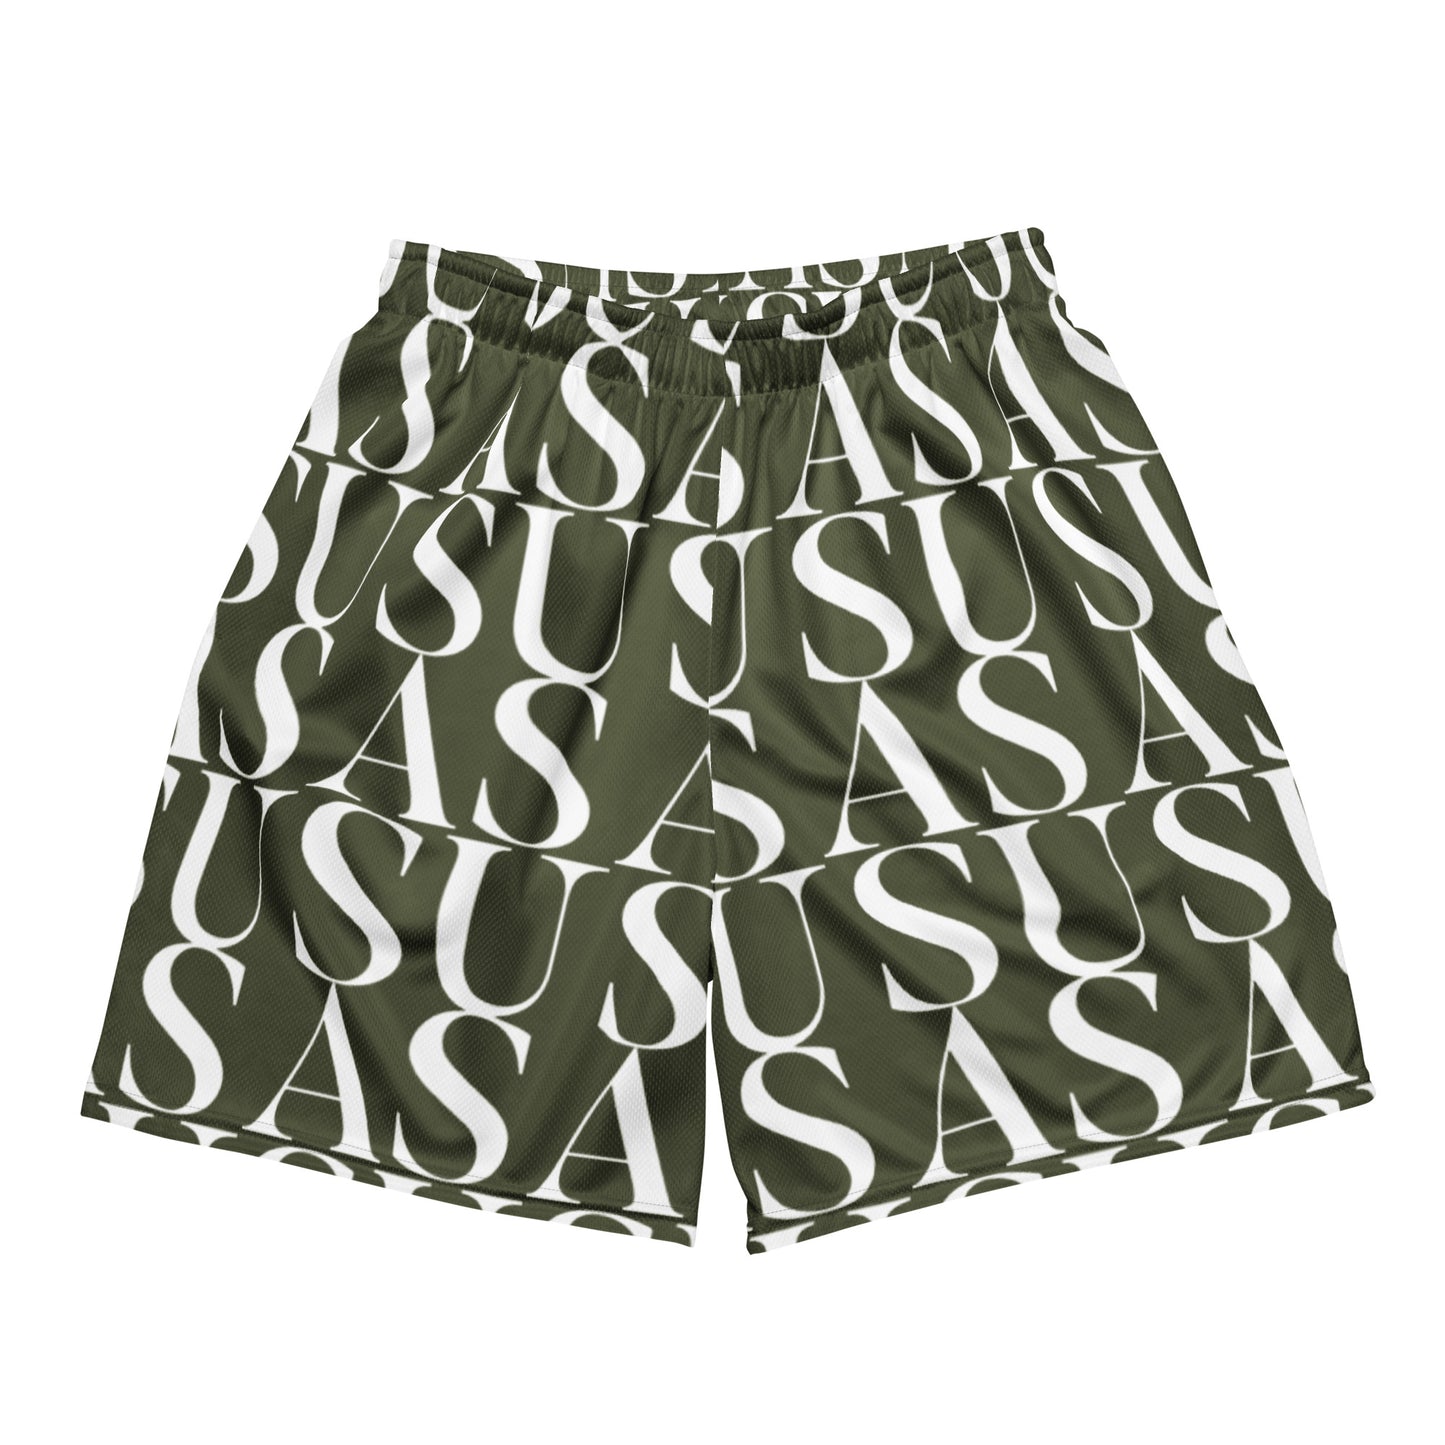 Olive SUAS Mesh Shorts